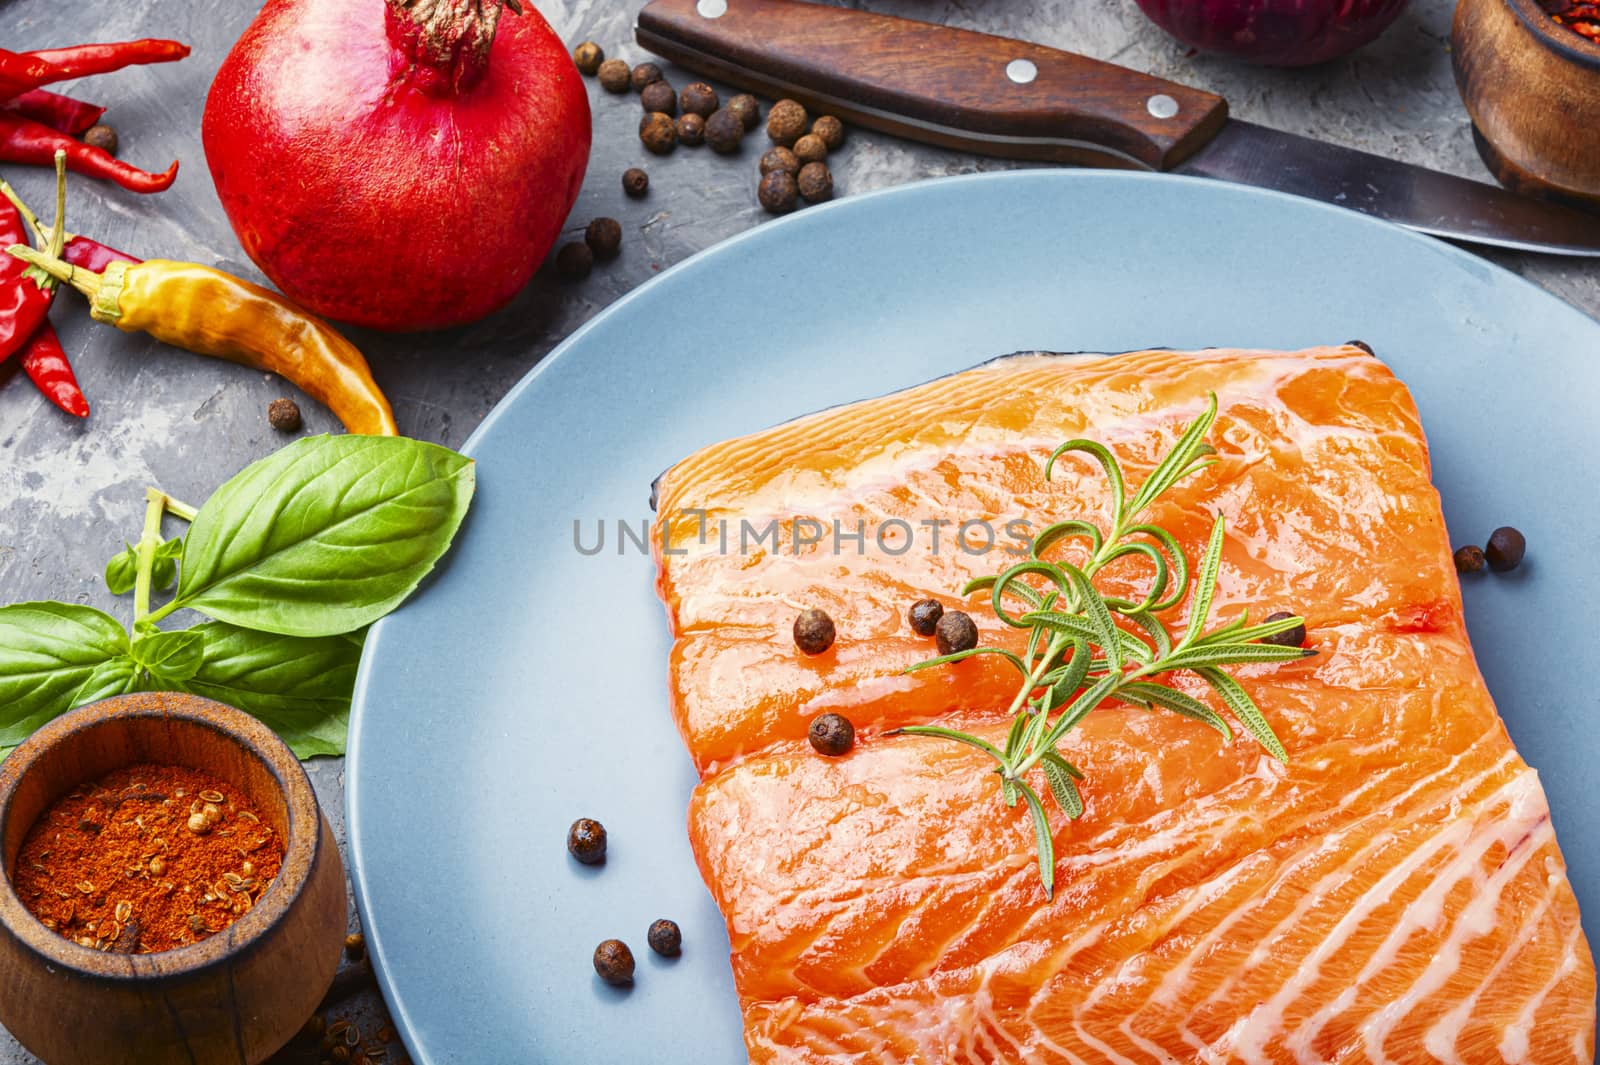 Salt fish.Raw salmon fillet with cooking ingredients